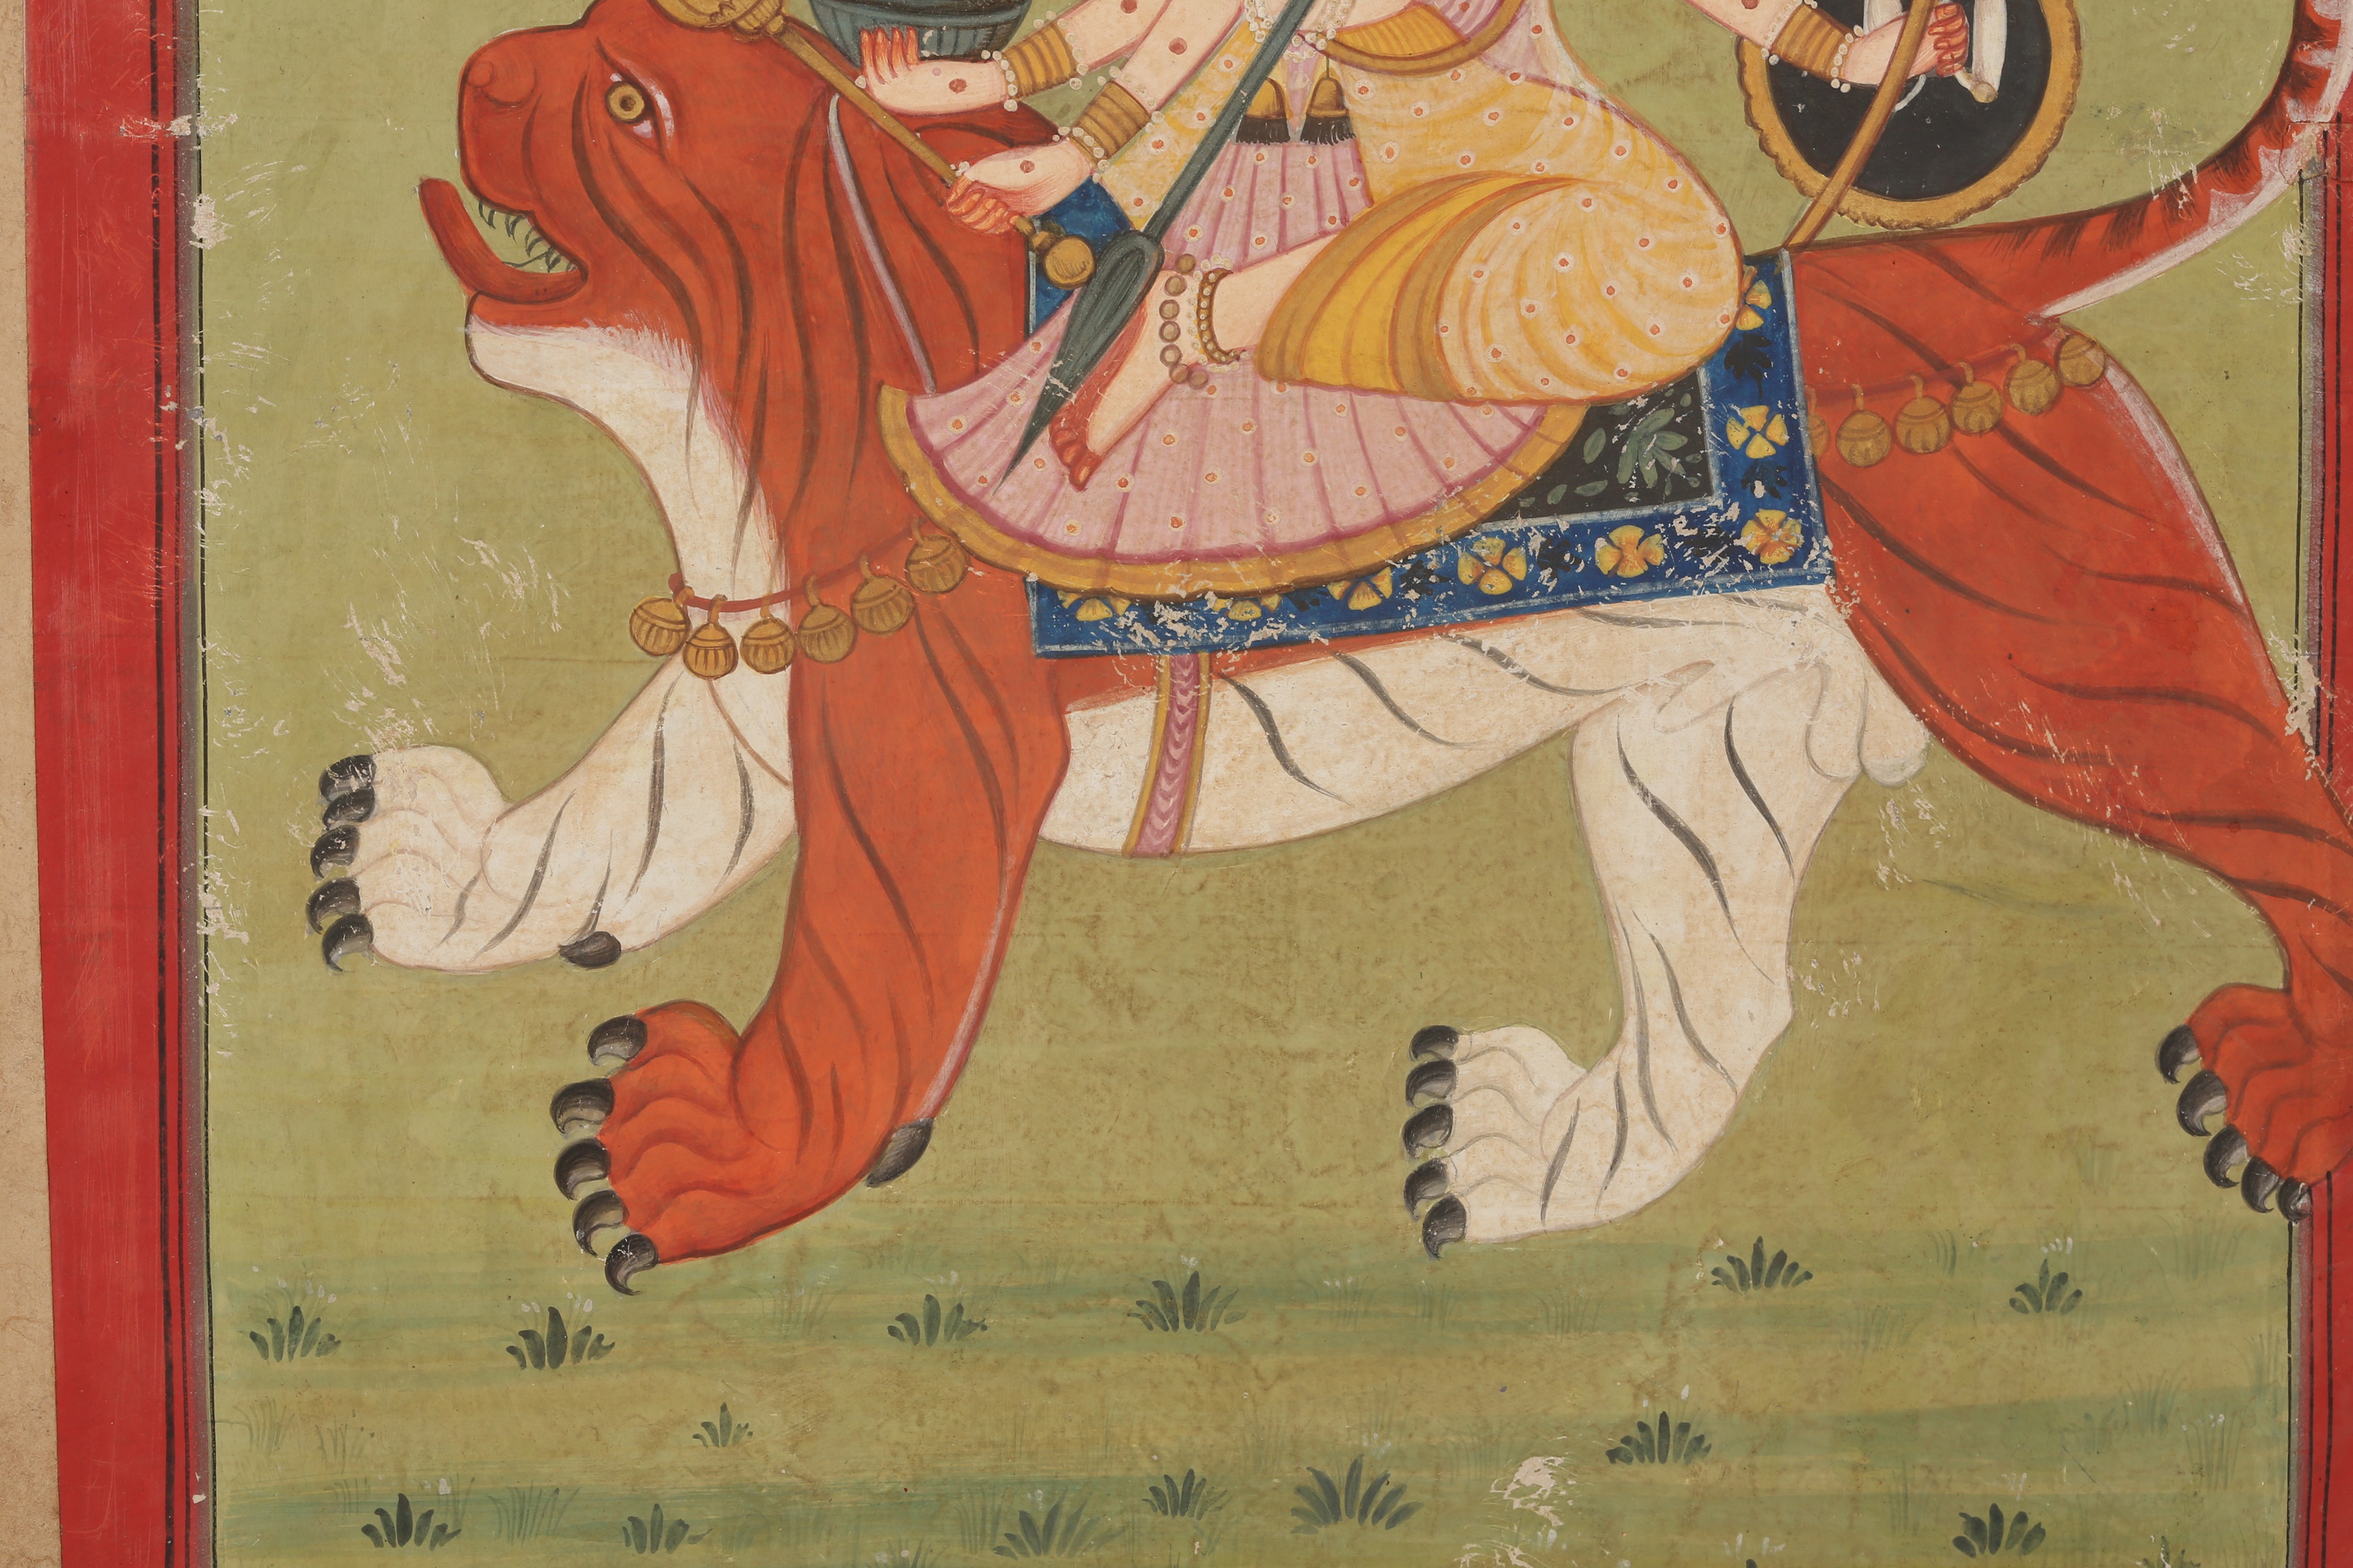 THE HINDU GODDESS DURGA SEATED ON HER MOUNT (VAHANA) - Image 4 of 5